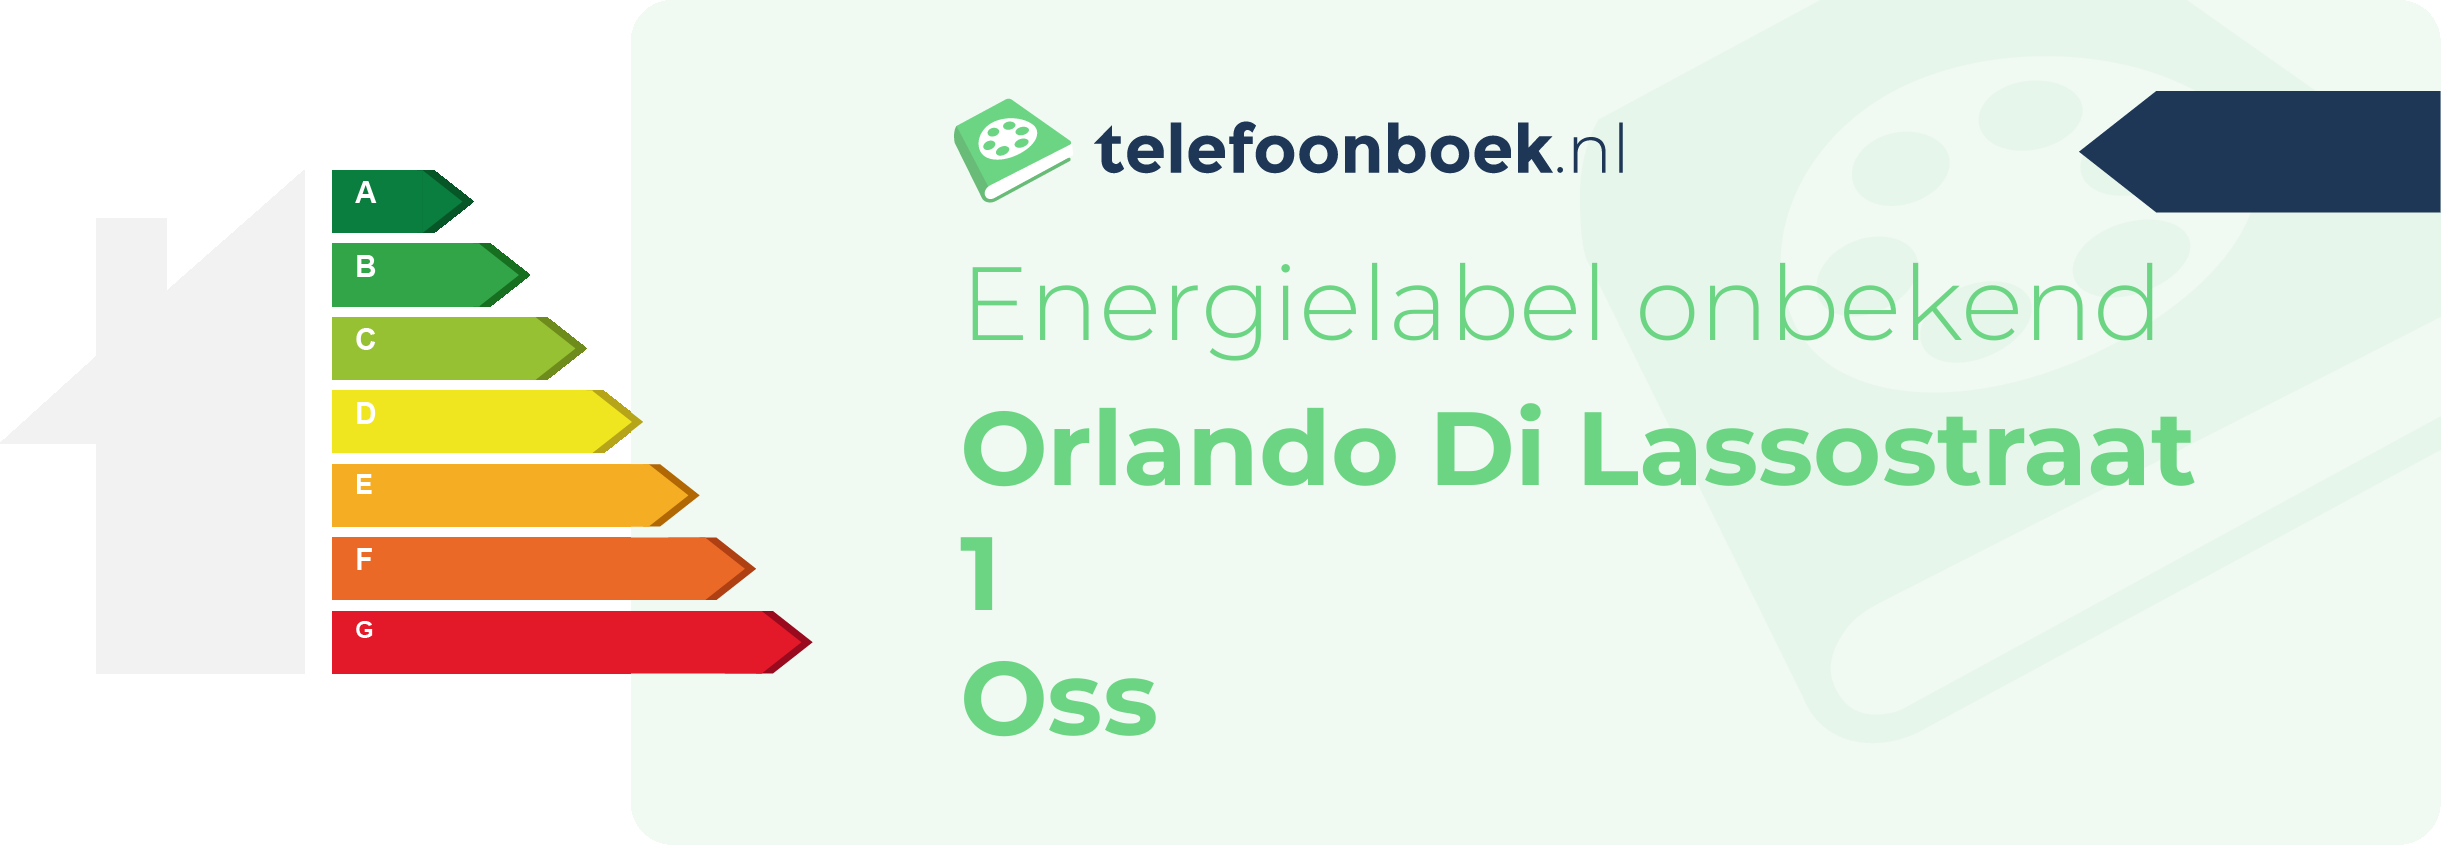 Energielabel Orlando Di Lassostraat 1 Oss